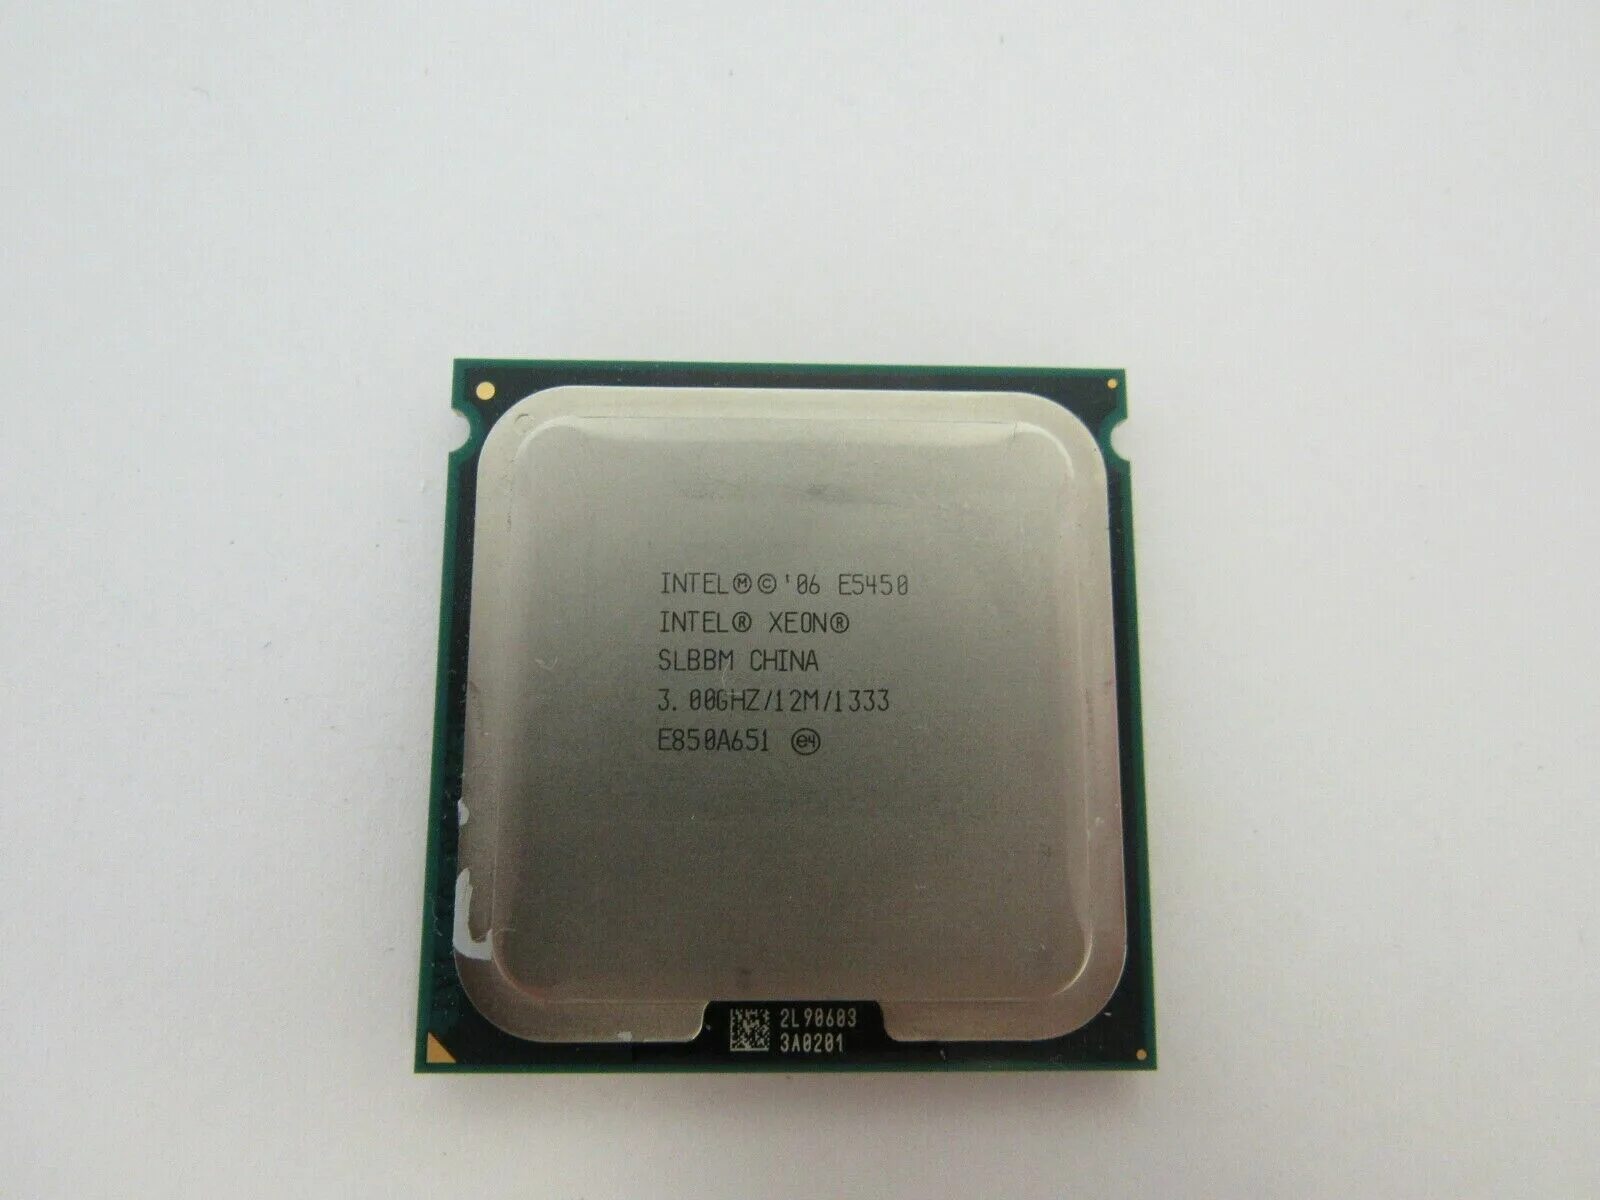 Intel Core 2 Quad q9300. Процессор Intel Core 2 Duo e4700. Intel 06 e5400 Pentium. Процессор Intel Pentium 4 531 Prescott. 2 ядра частота 2 ггц